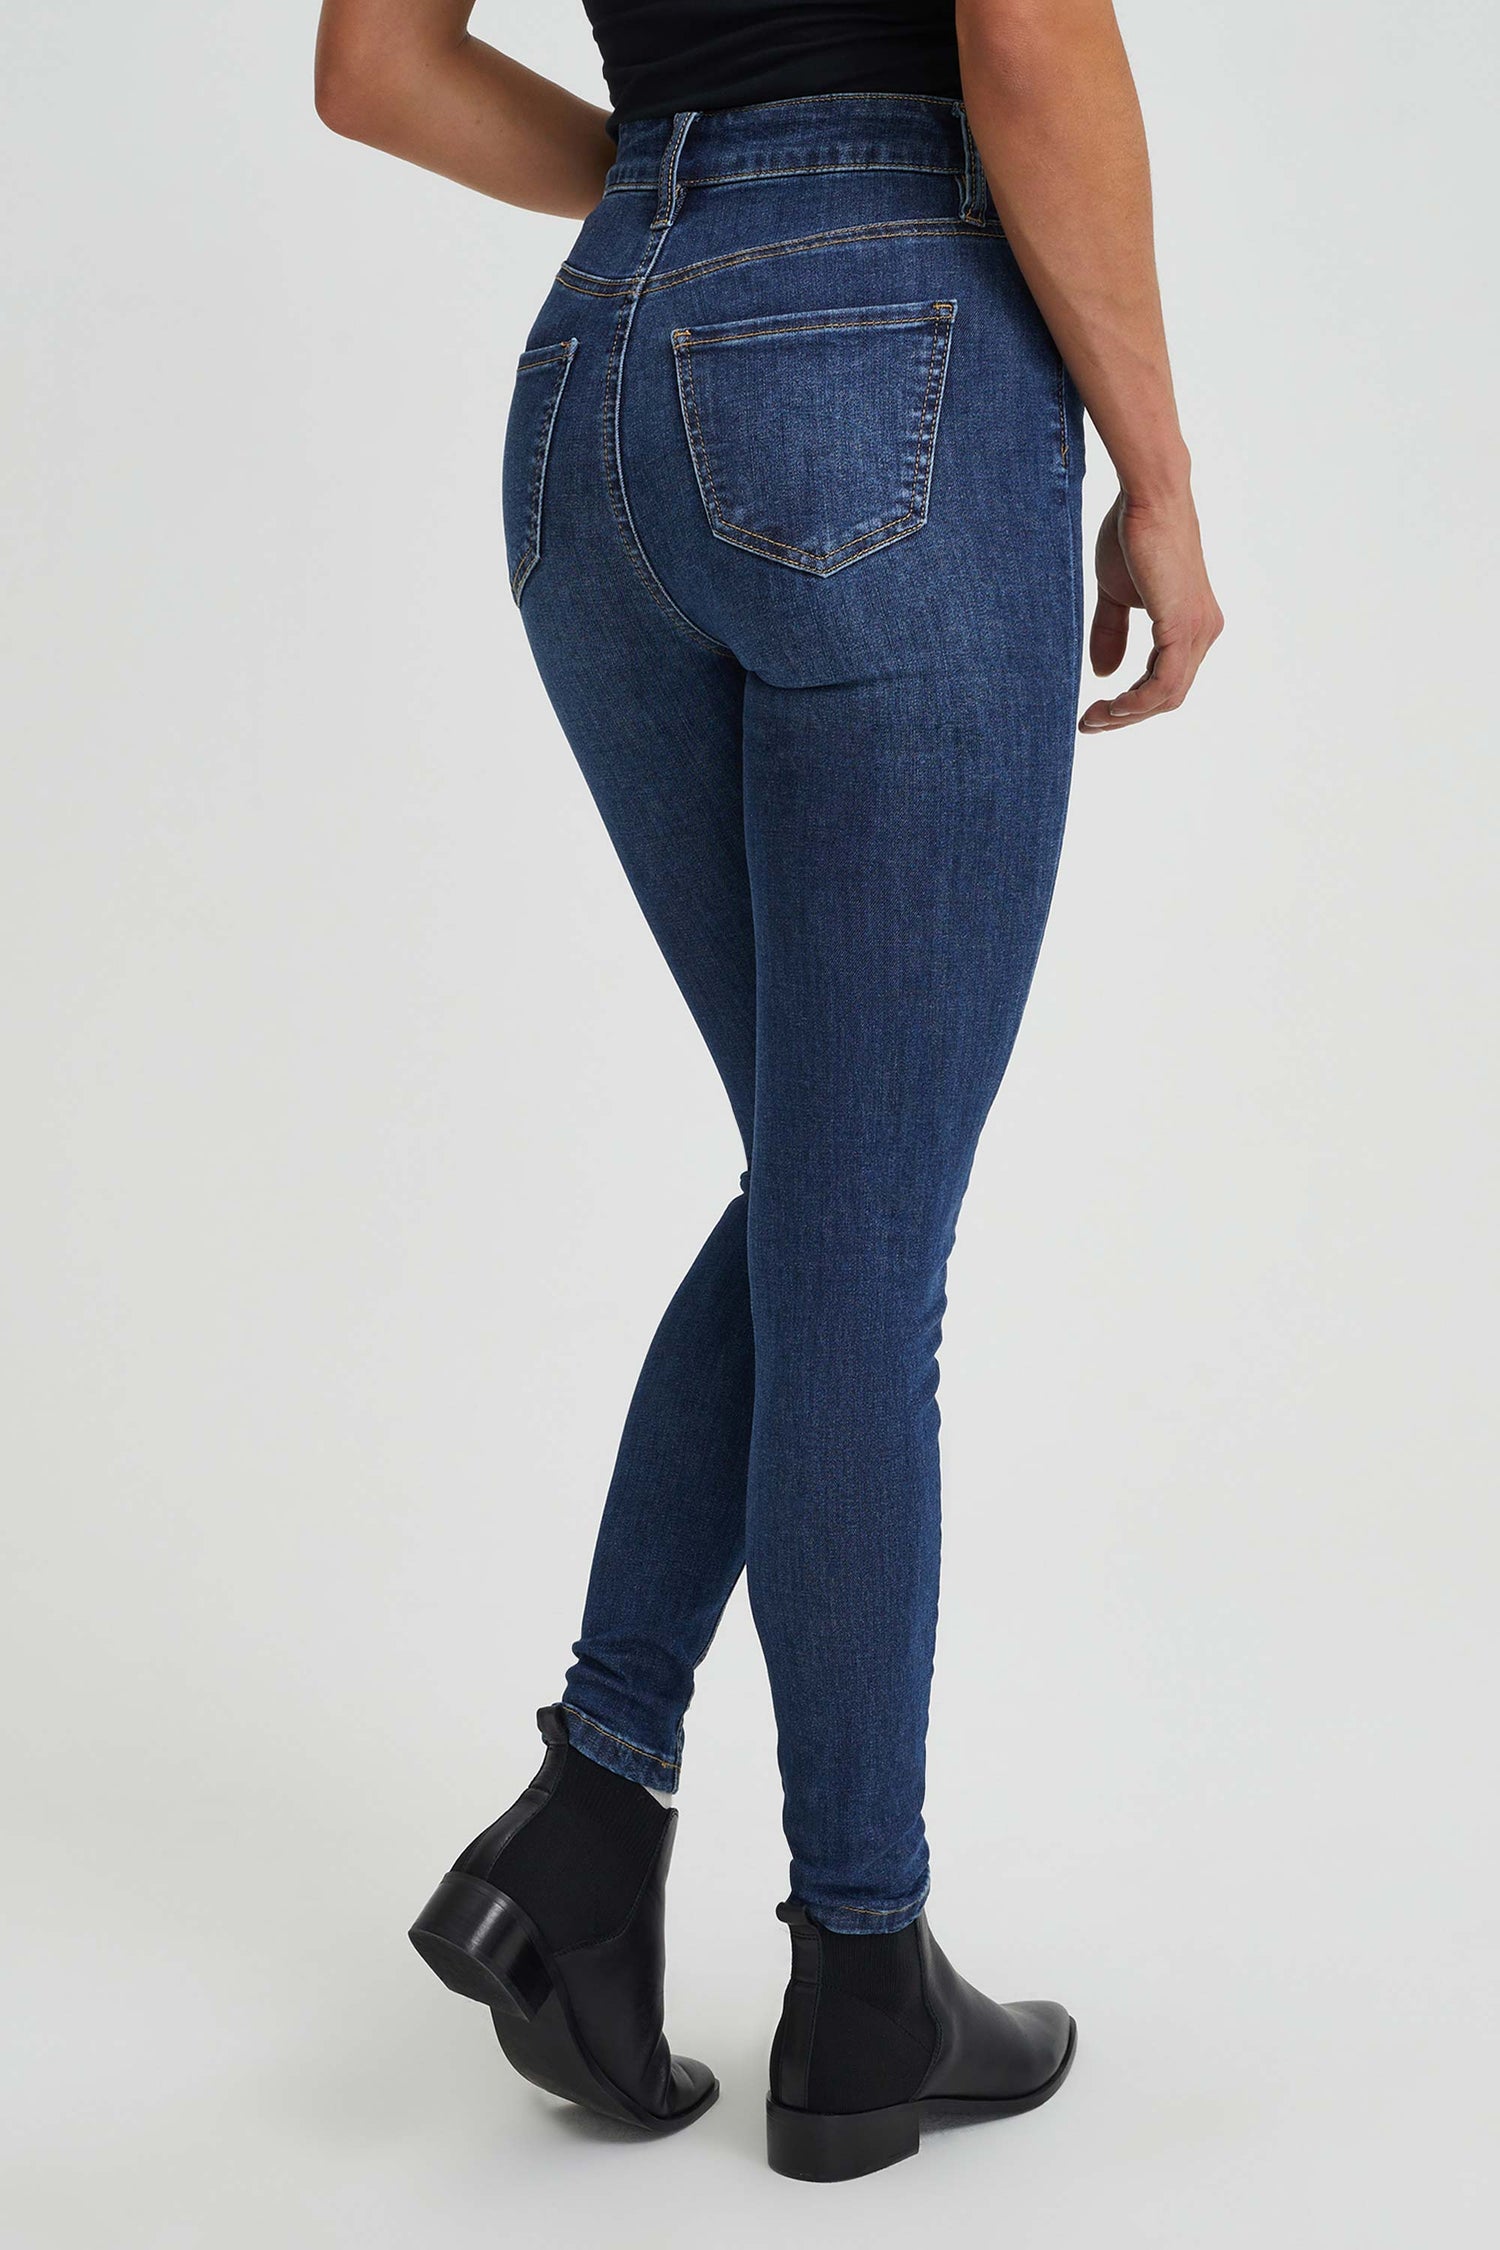 Jeggings & Skinny Jeans – Le Jean Bleu